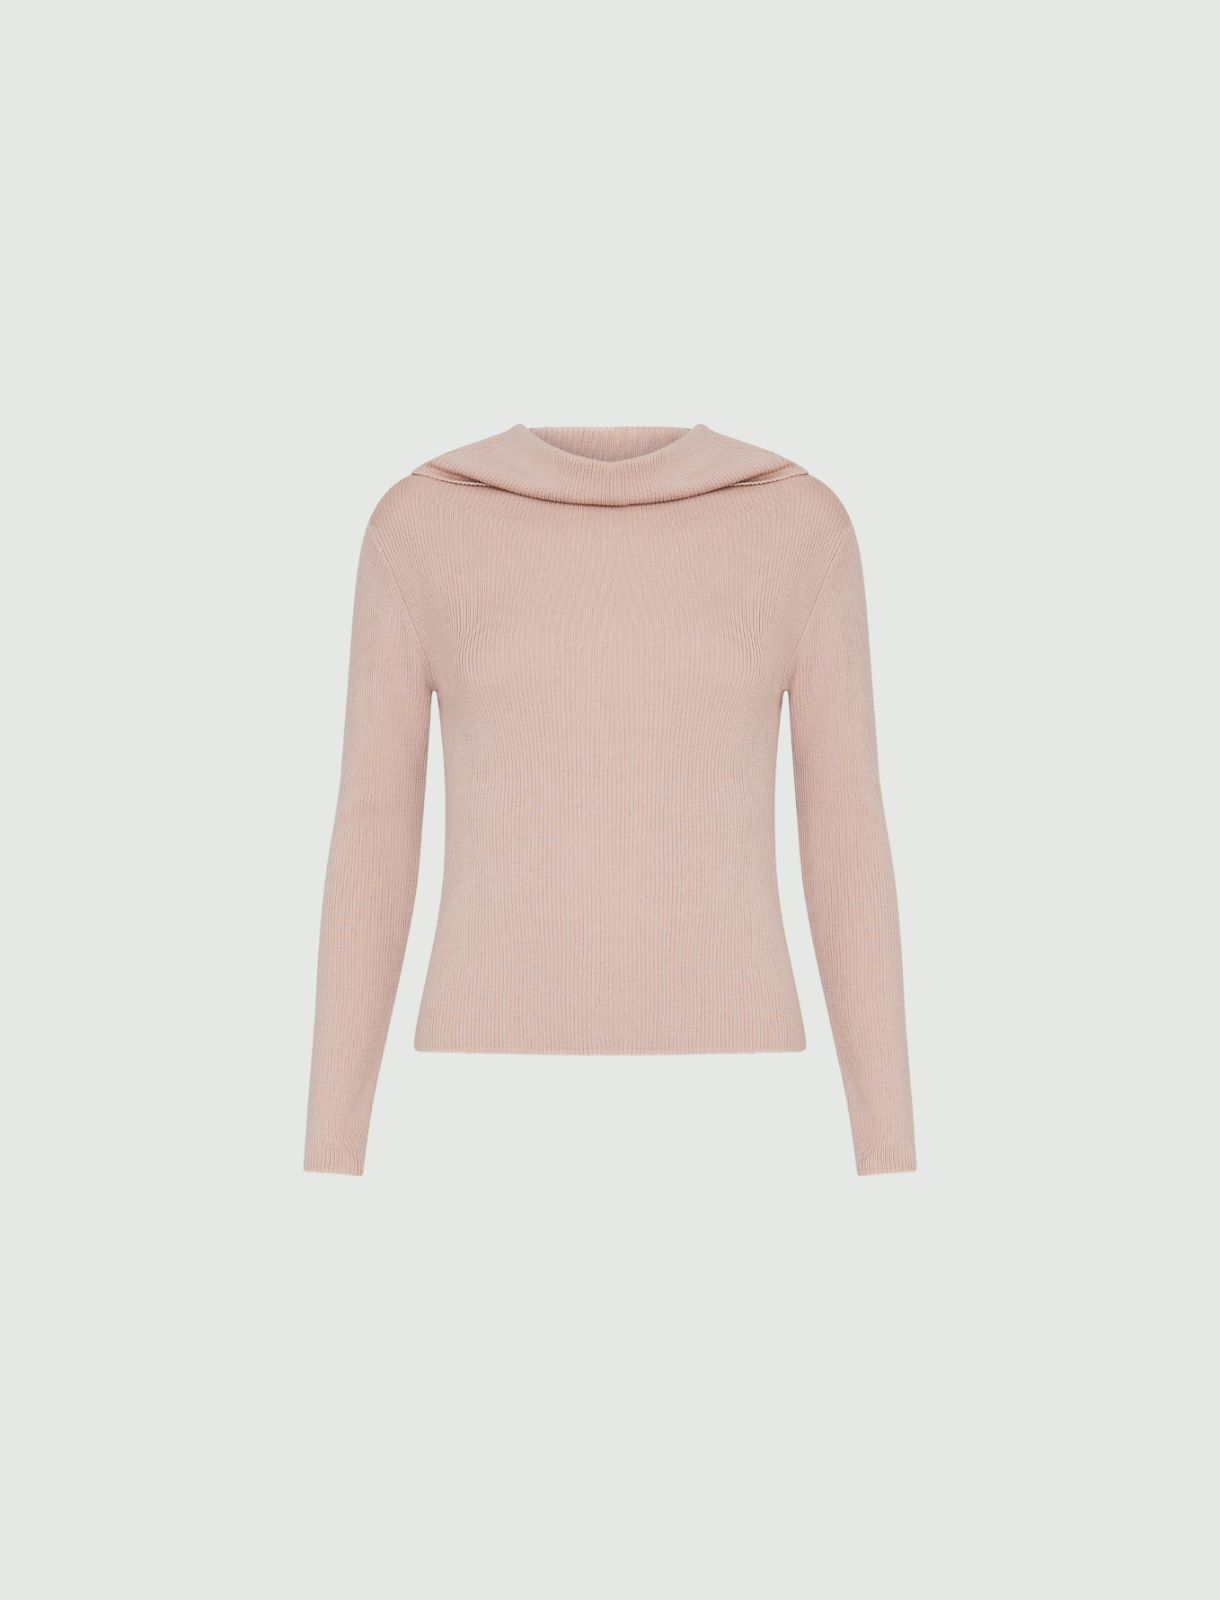 Off-the-shoulder sweater - Nudo - Marella - 5